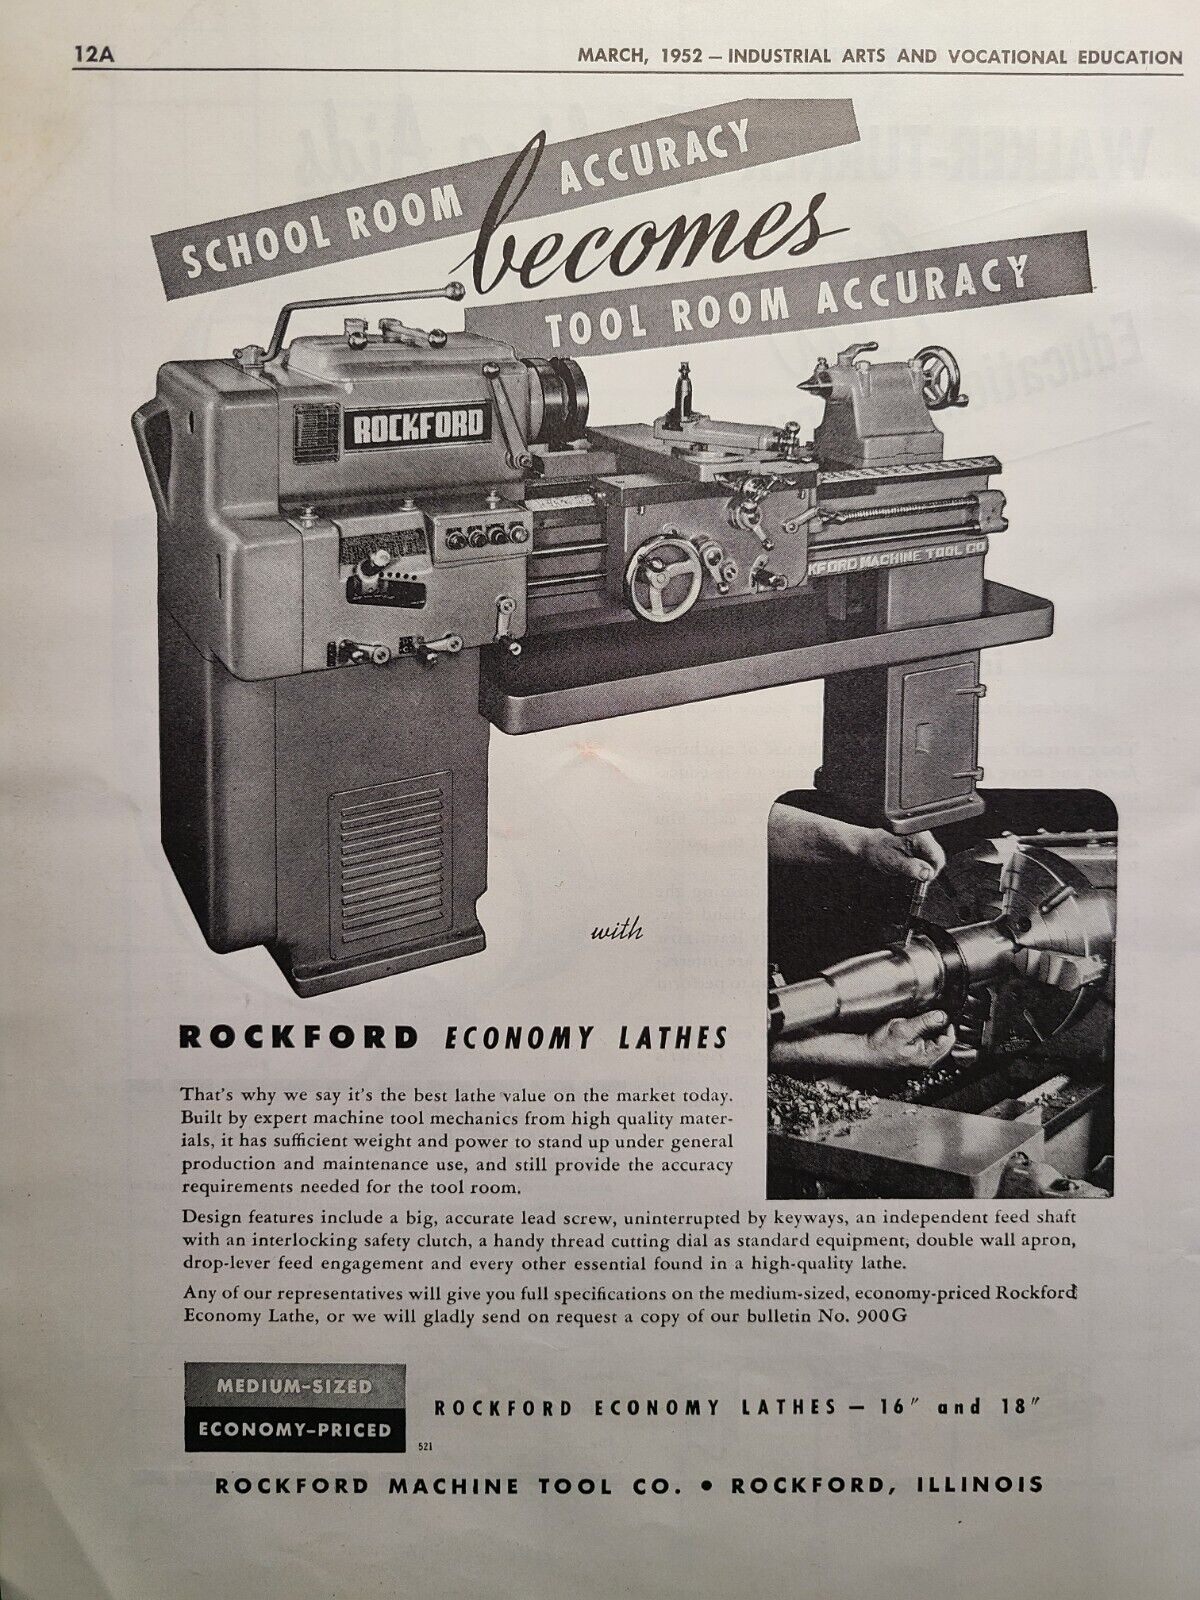 Vintage Print Ad 1952 Rockford Economy Lathes Accuracy School Shop Machine